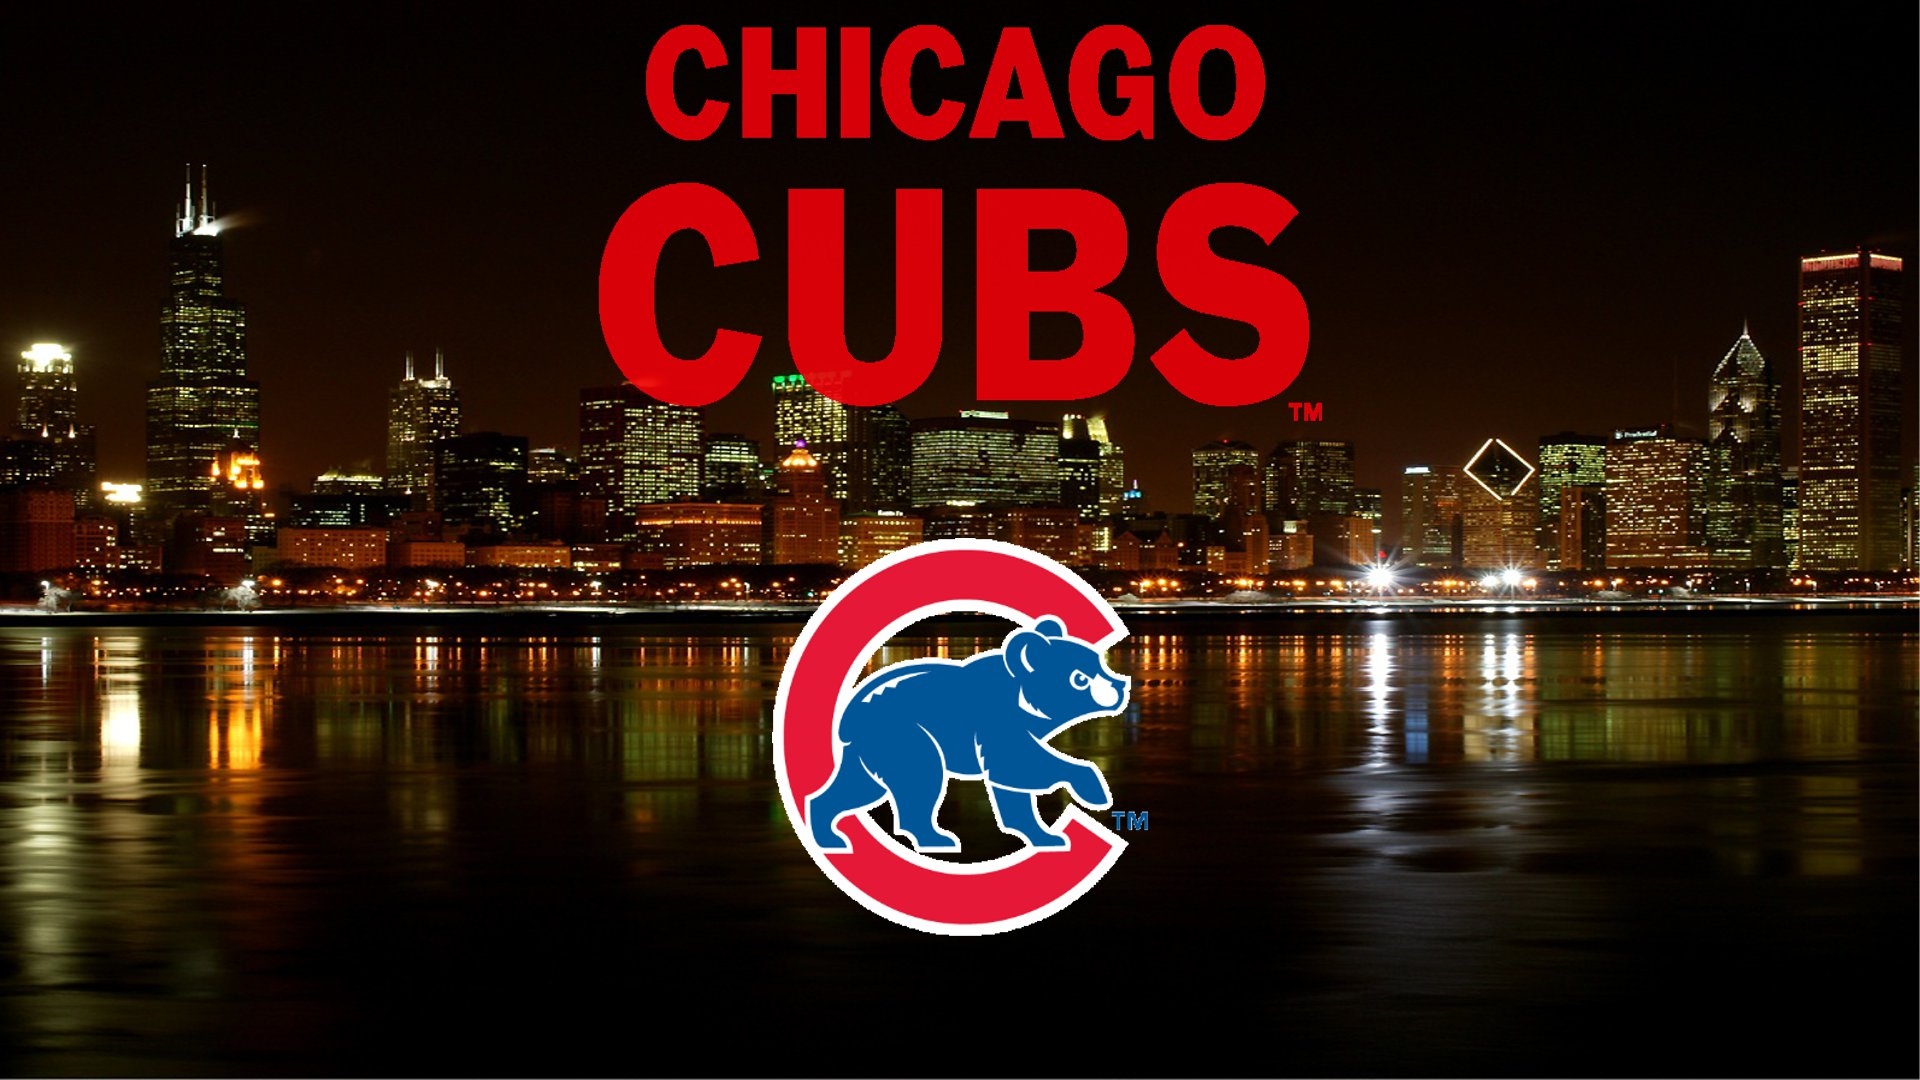 Chicago Cubs wallpaper | 1920x1080 | #69228